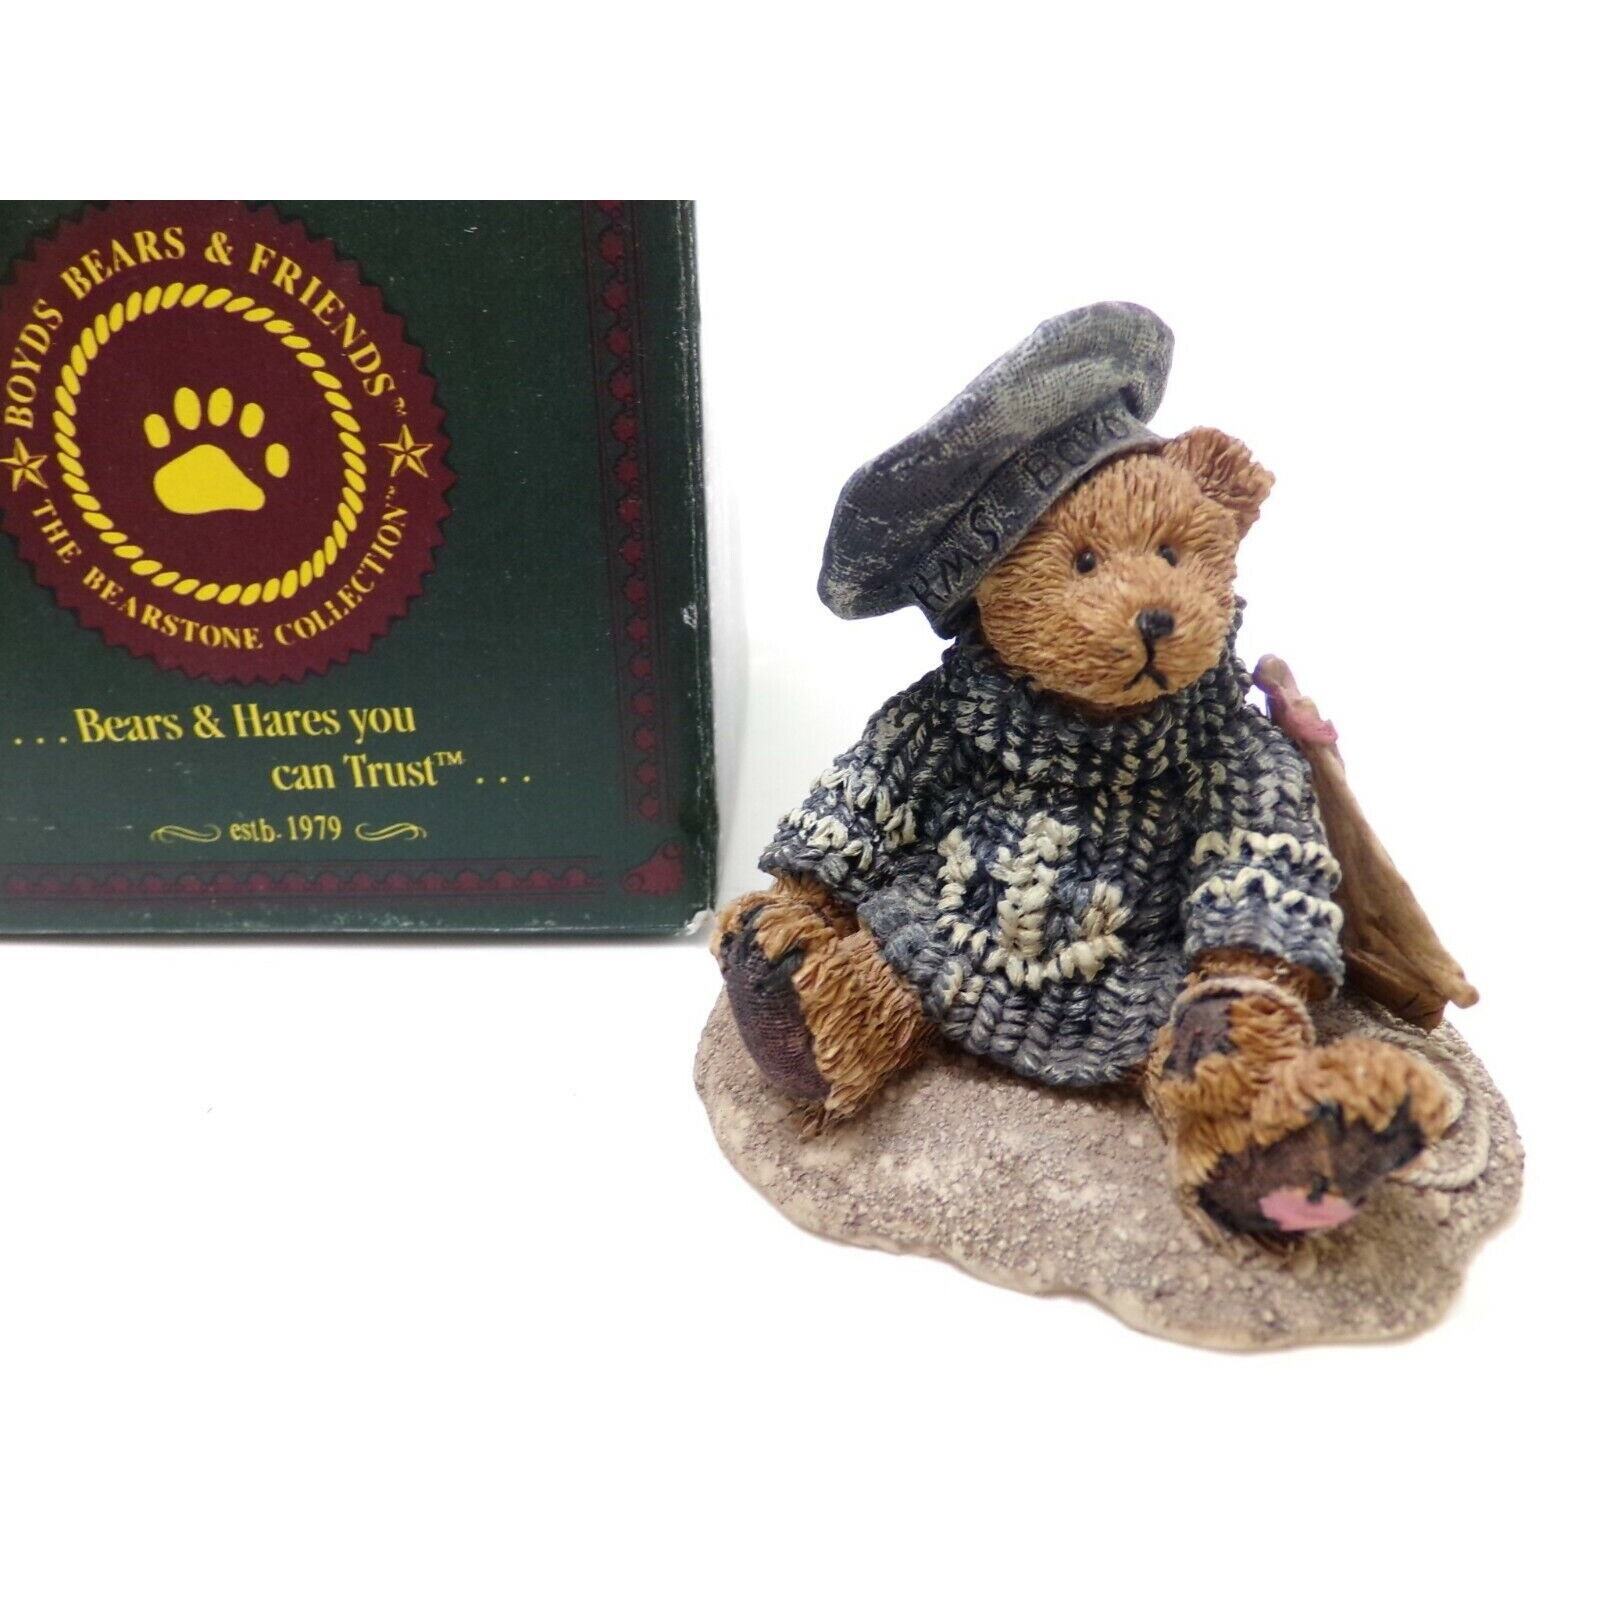 Vintage Boyds Bears & Friends Bearstone Figurine Christian By the Sea Style